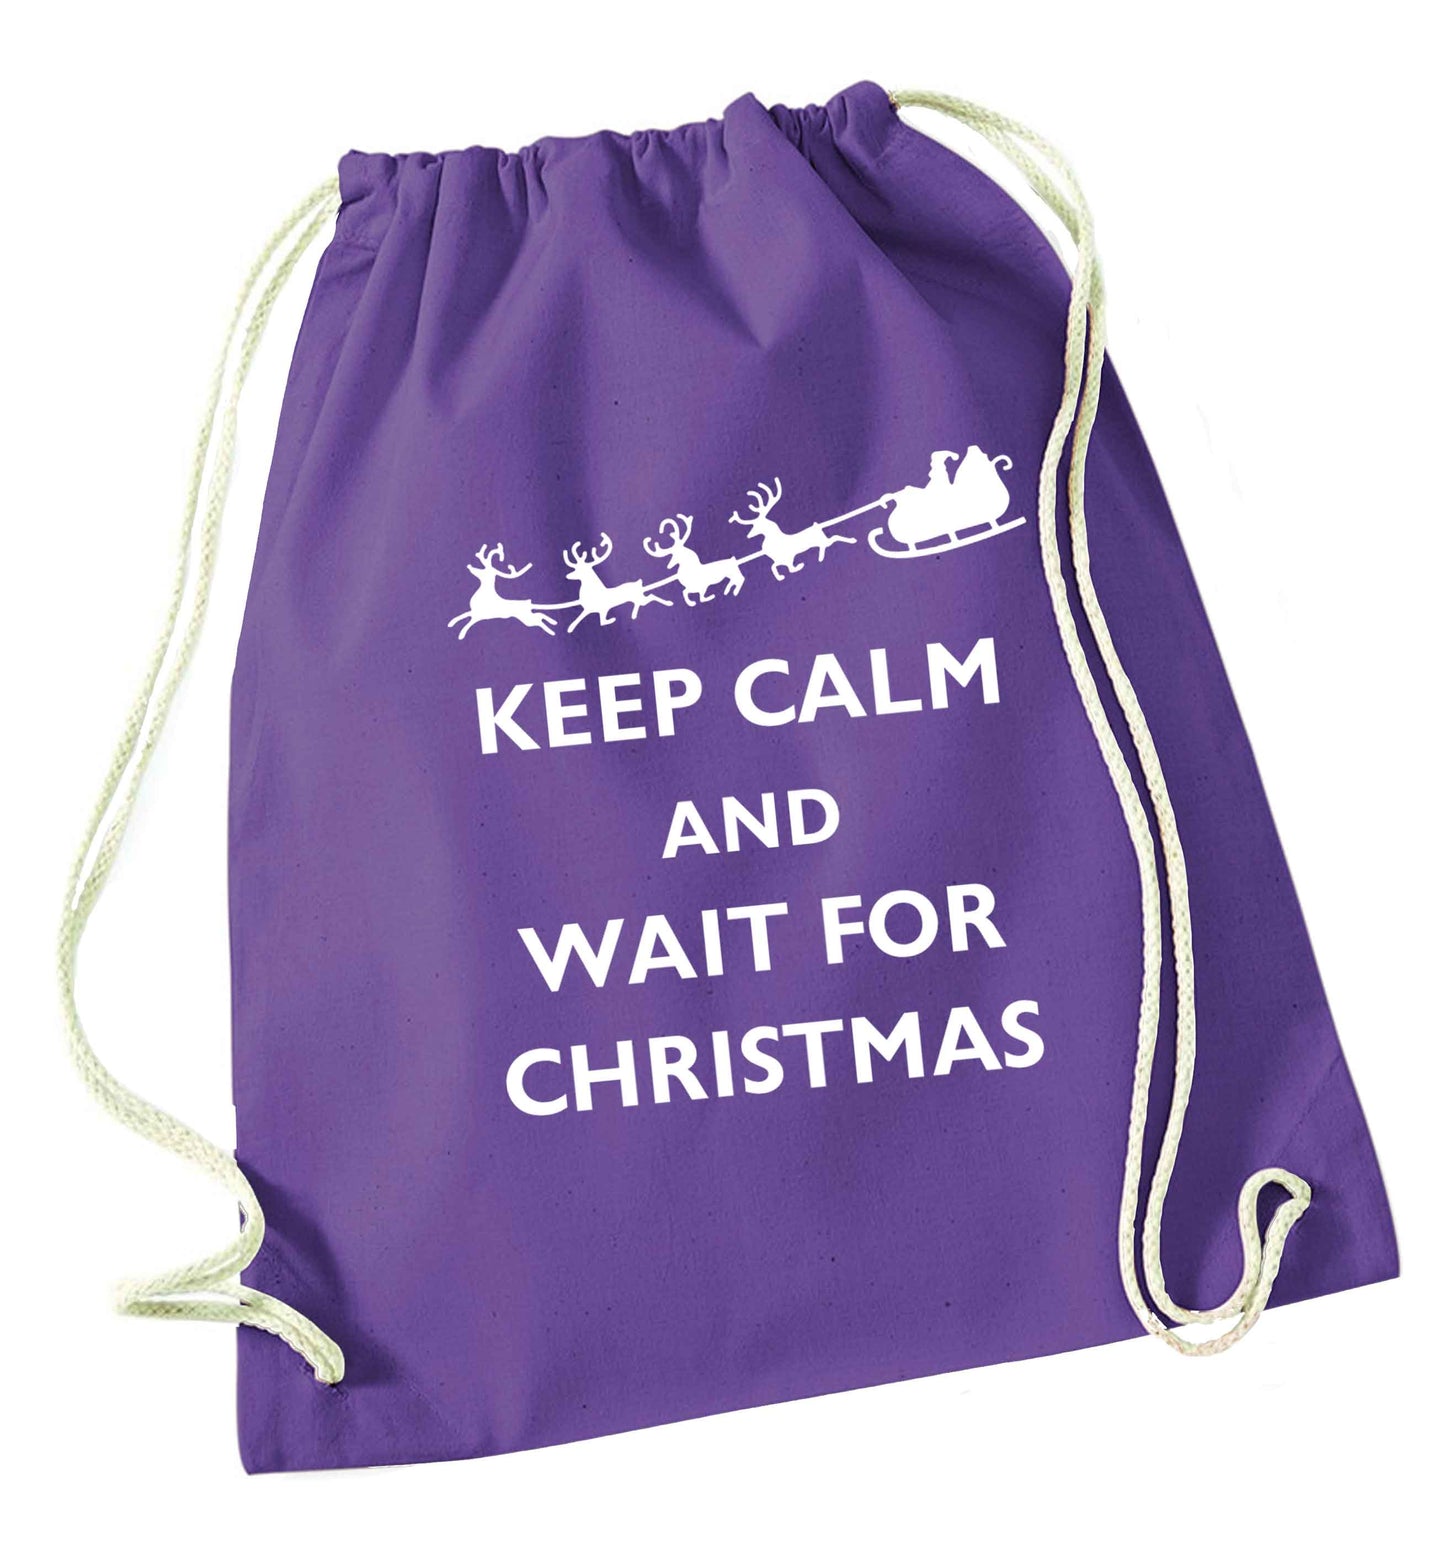 Keep calm and wait for Christmas purple drawstring bag